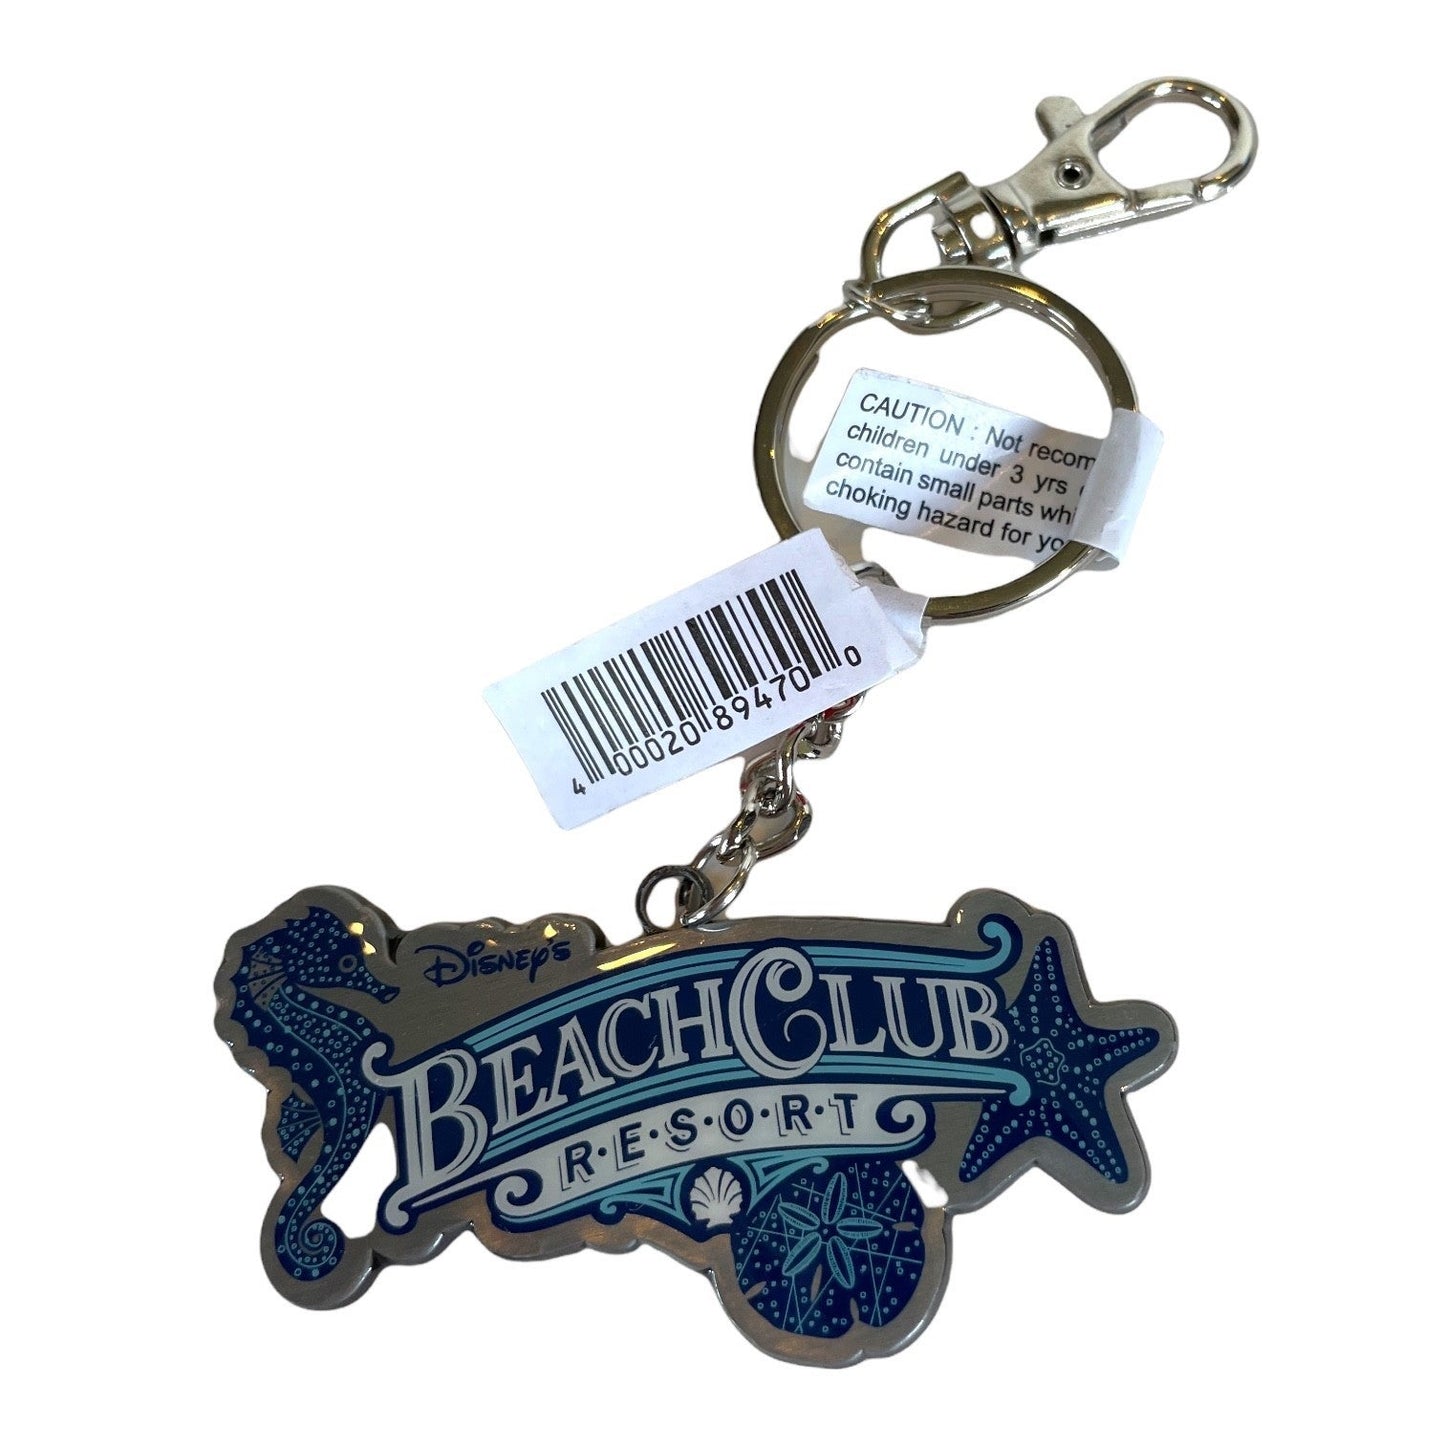 Disney's Beach Club Resort Keychain